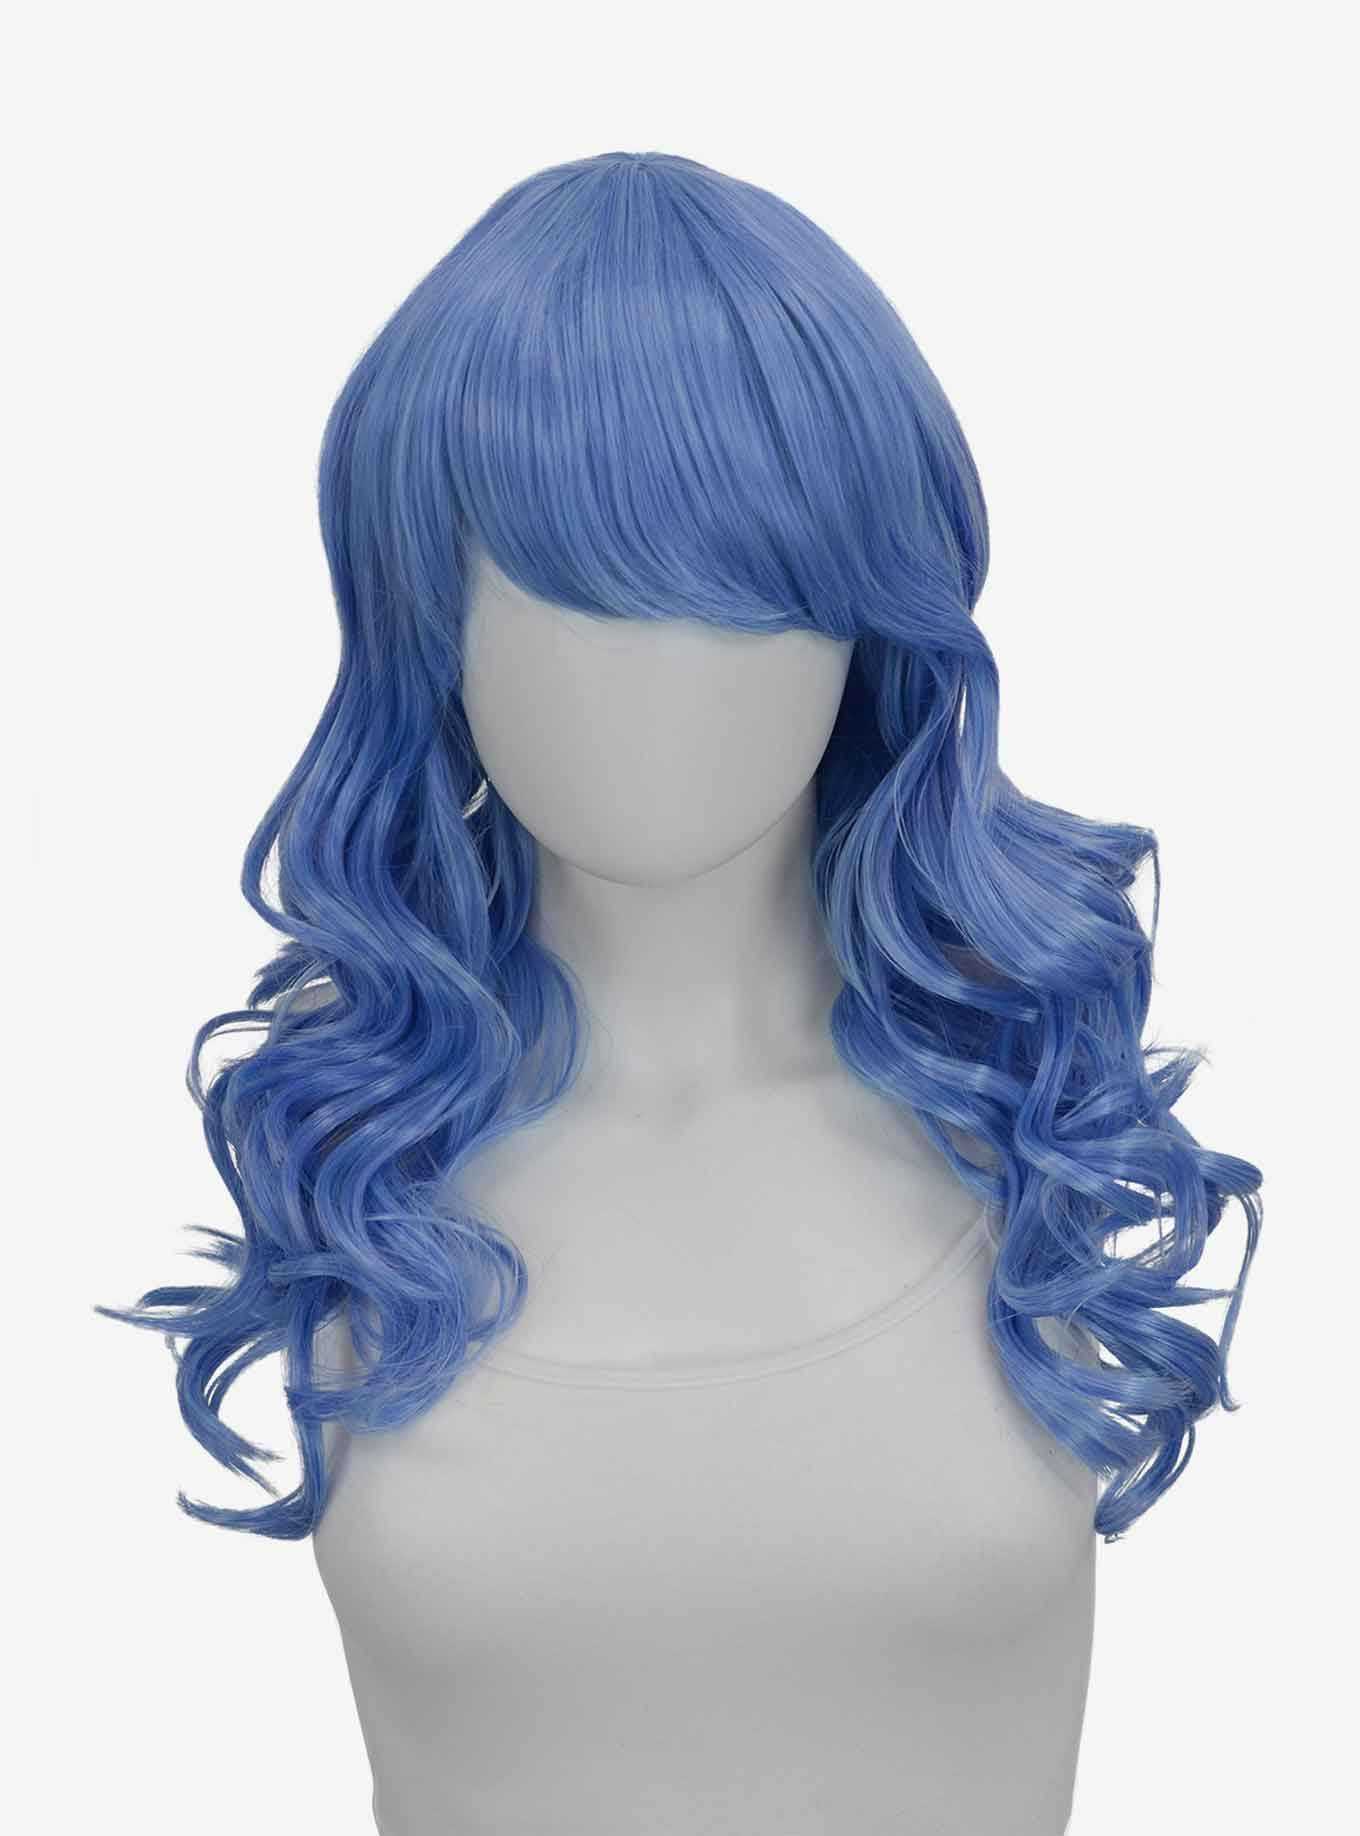 Epic Cosplay Hestia Light Blue Mix Shoulder Length Curly Wig, , hi-res